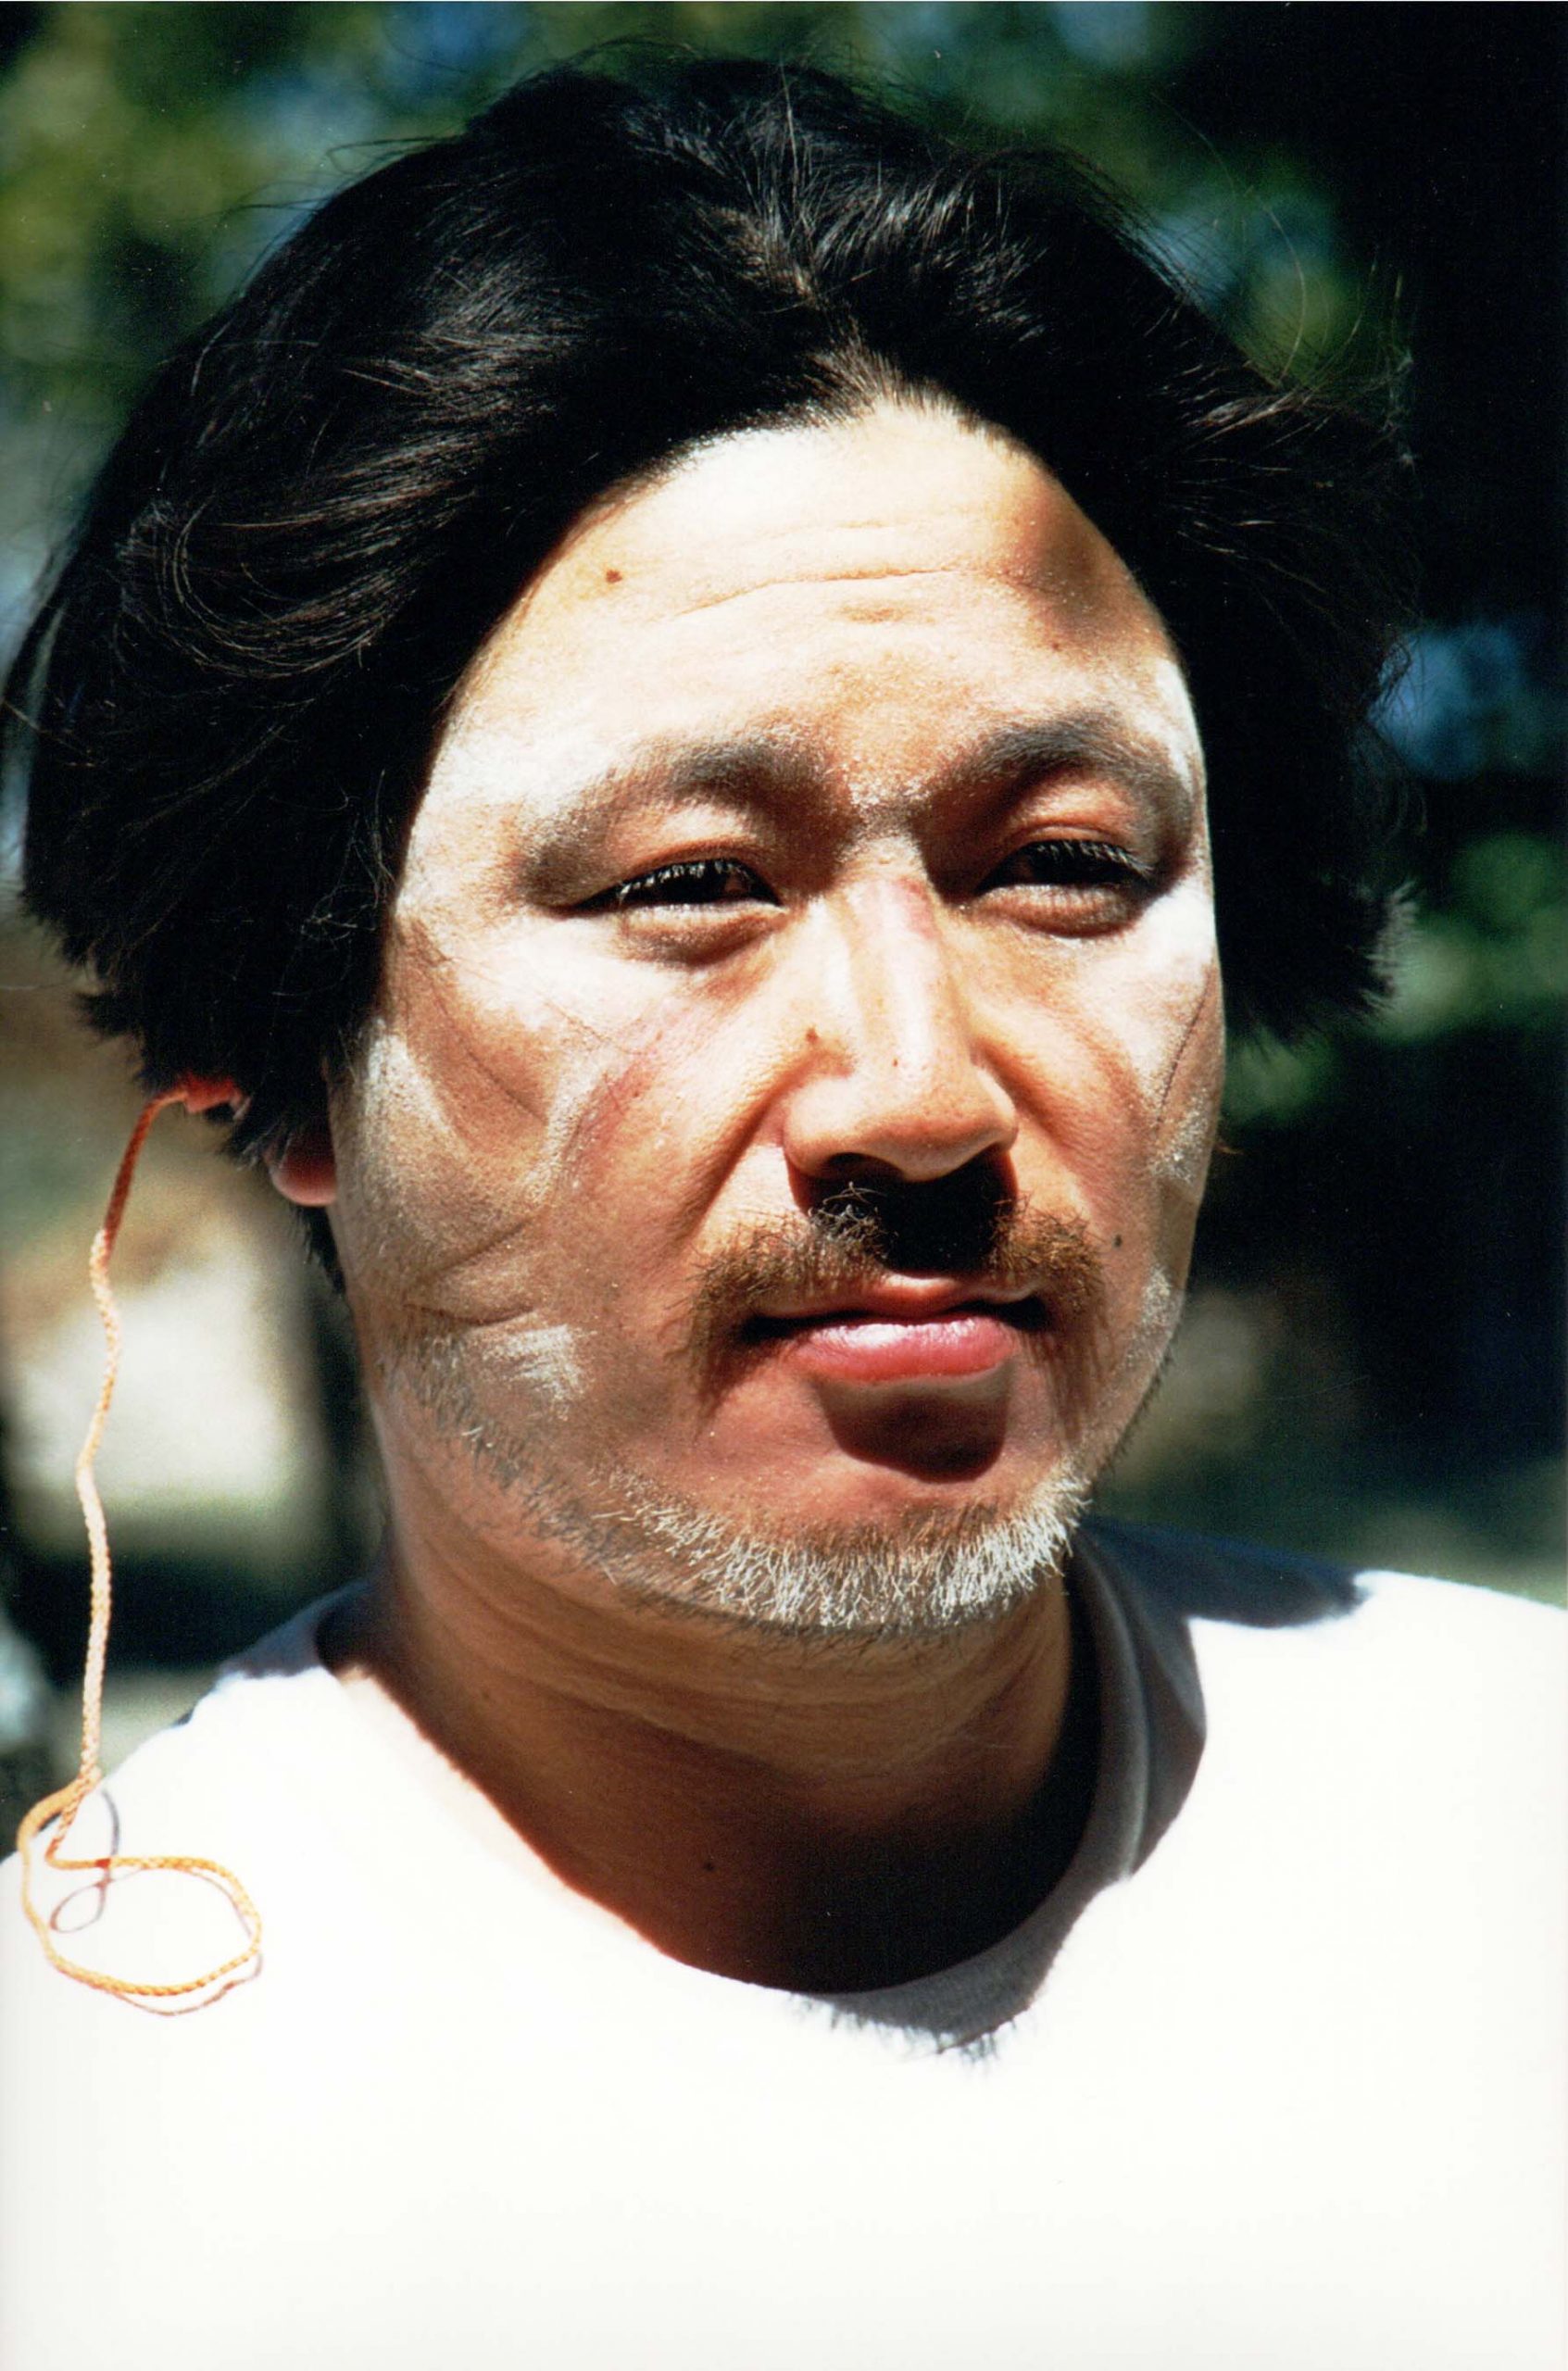 Takashi Kondo, The meaning of zero, 1999